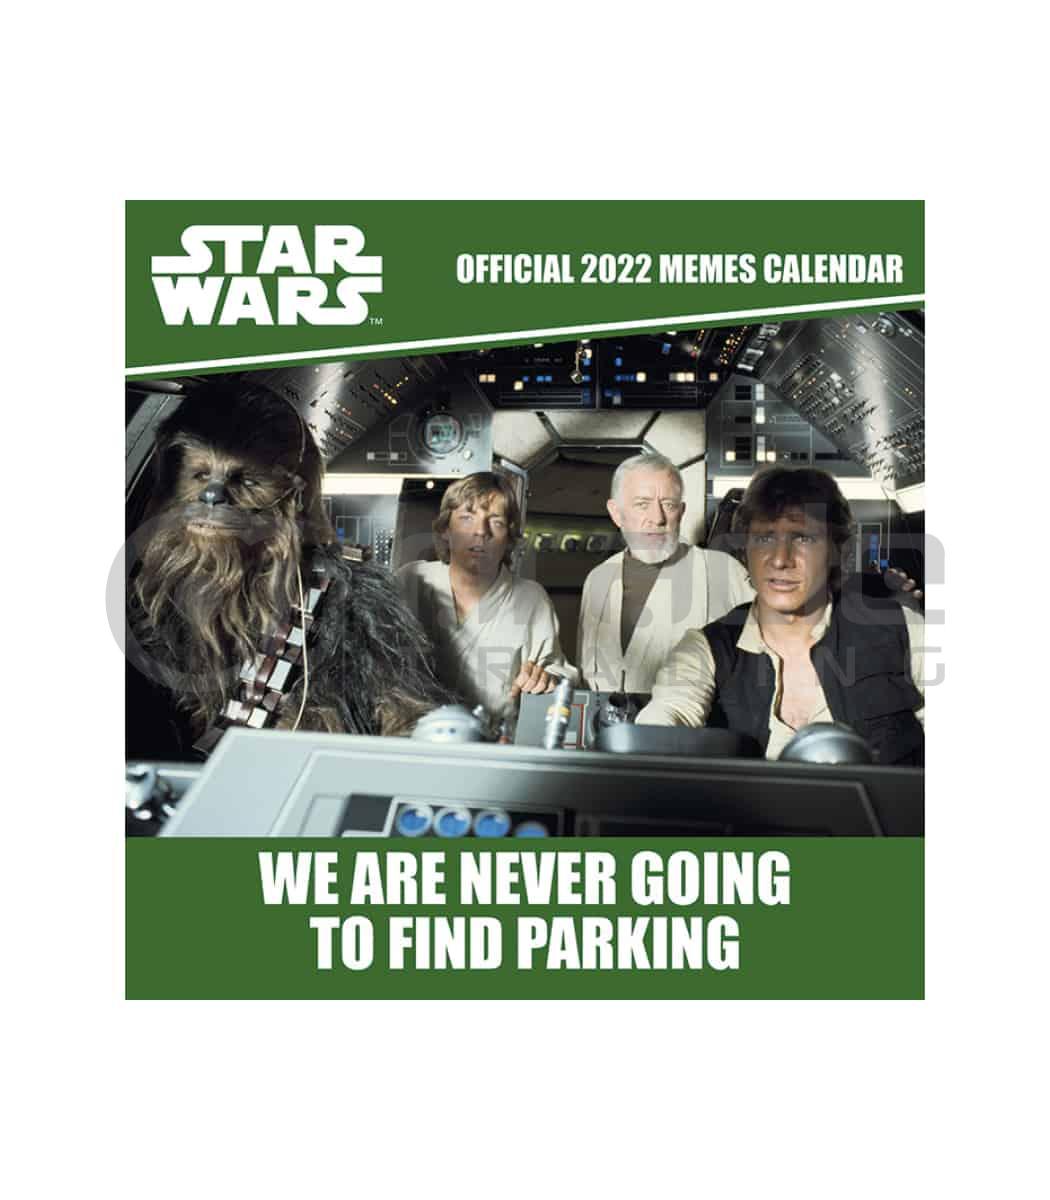 Star Wars Memes 2022 Calendar